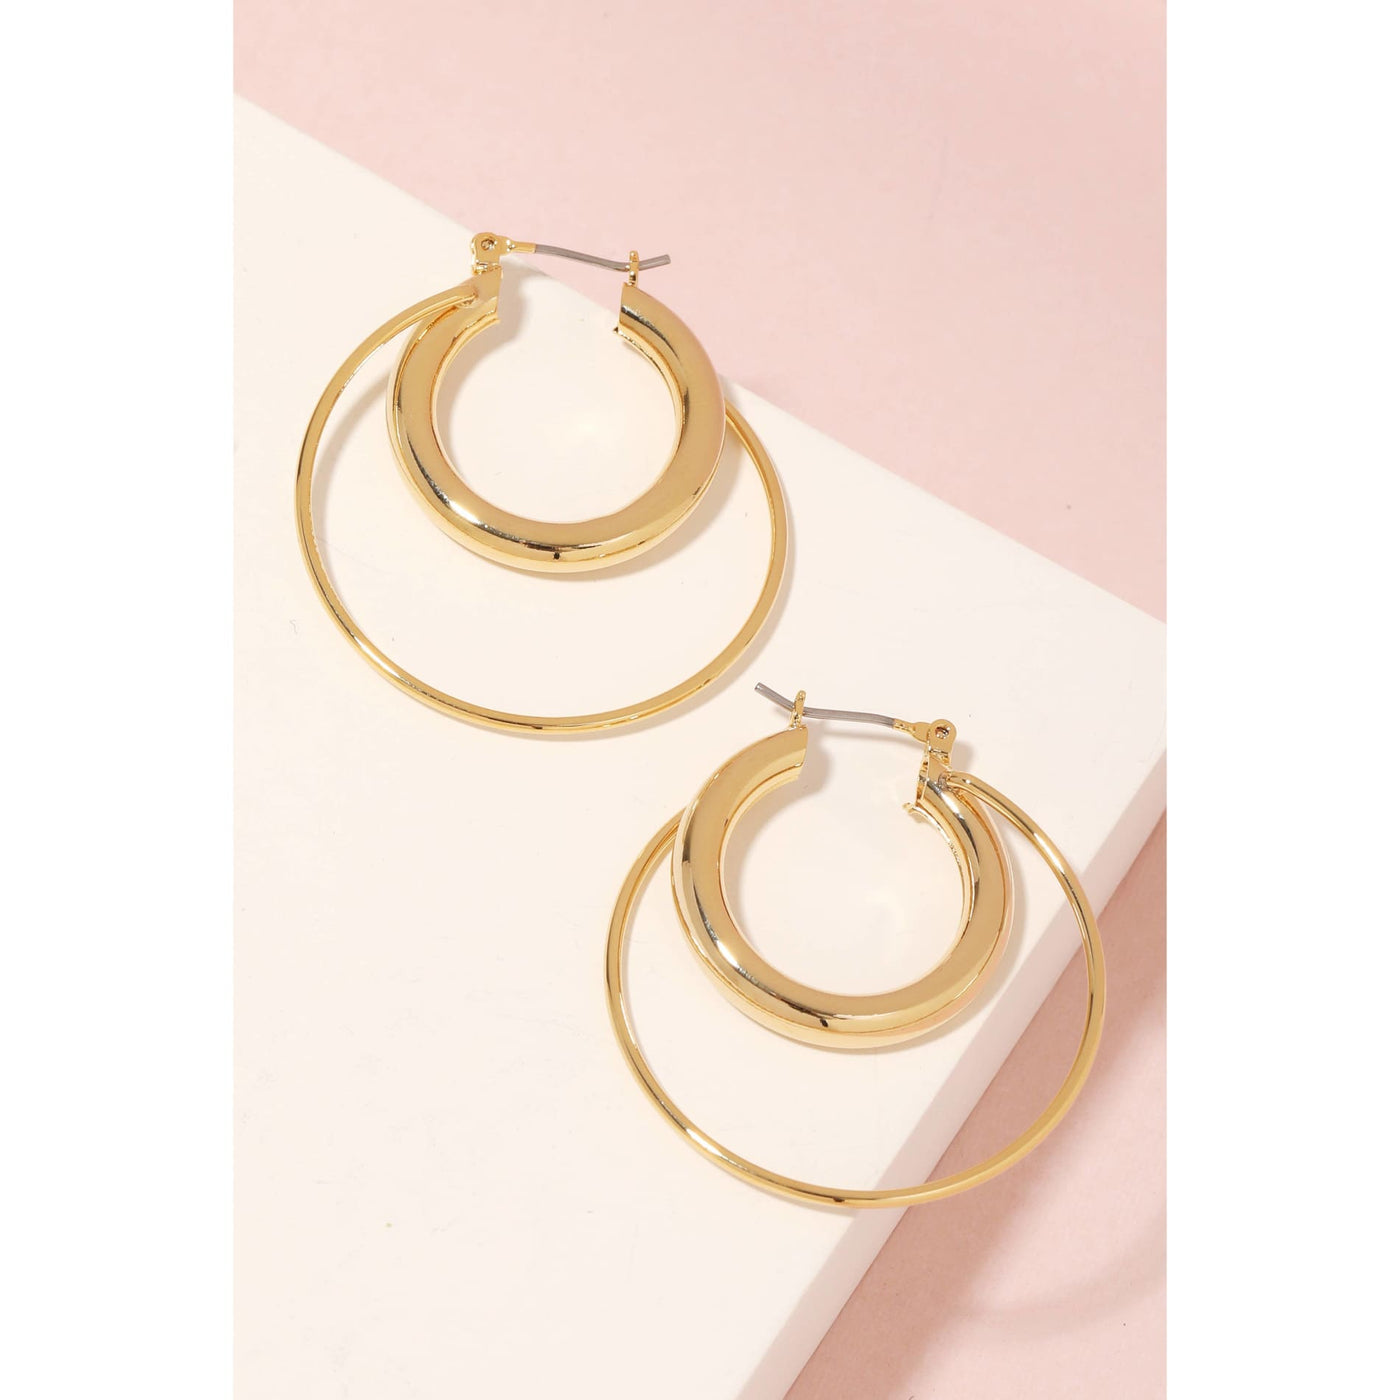 Double Layered Pincatch Hoop Earrings - Gold - 190 Jewelry